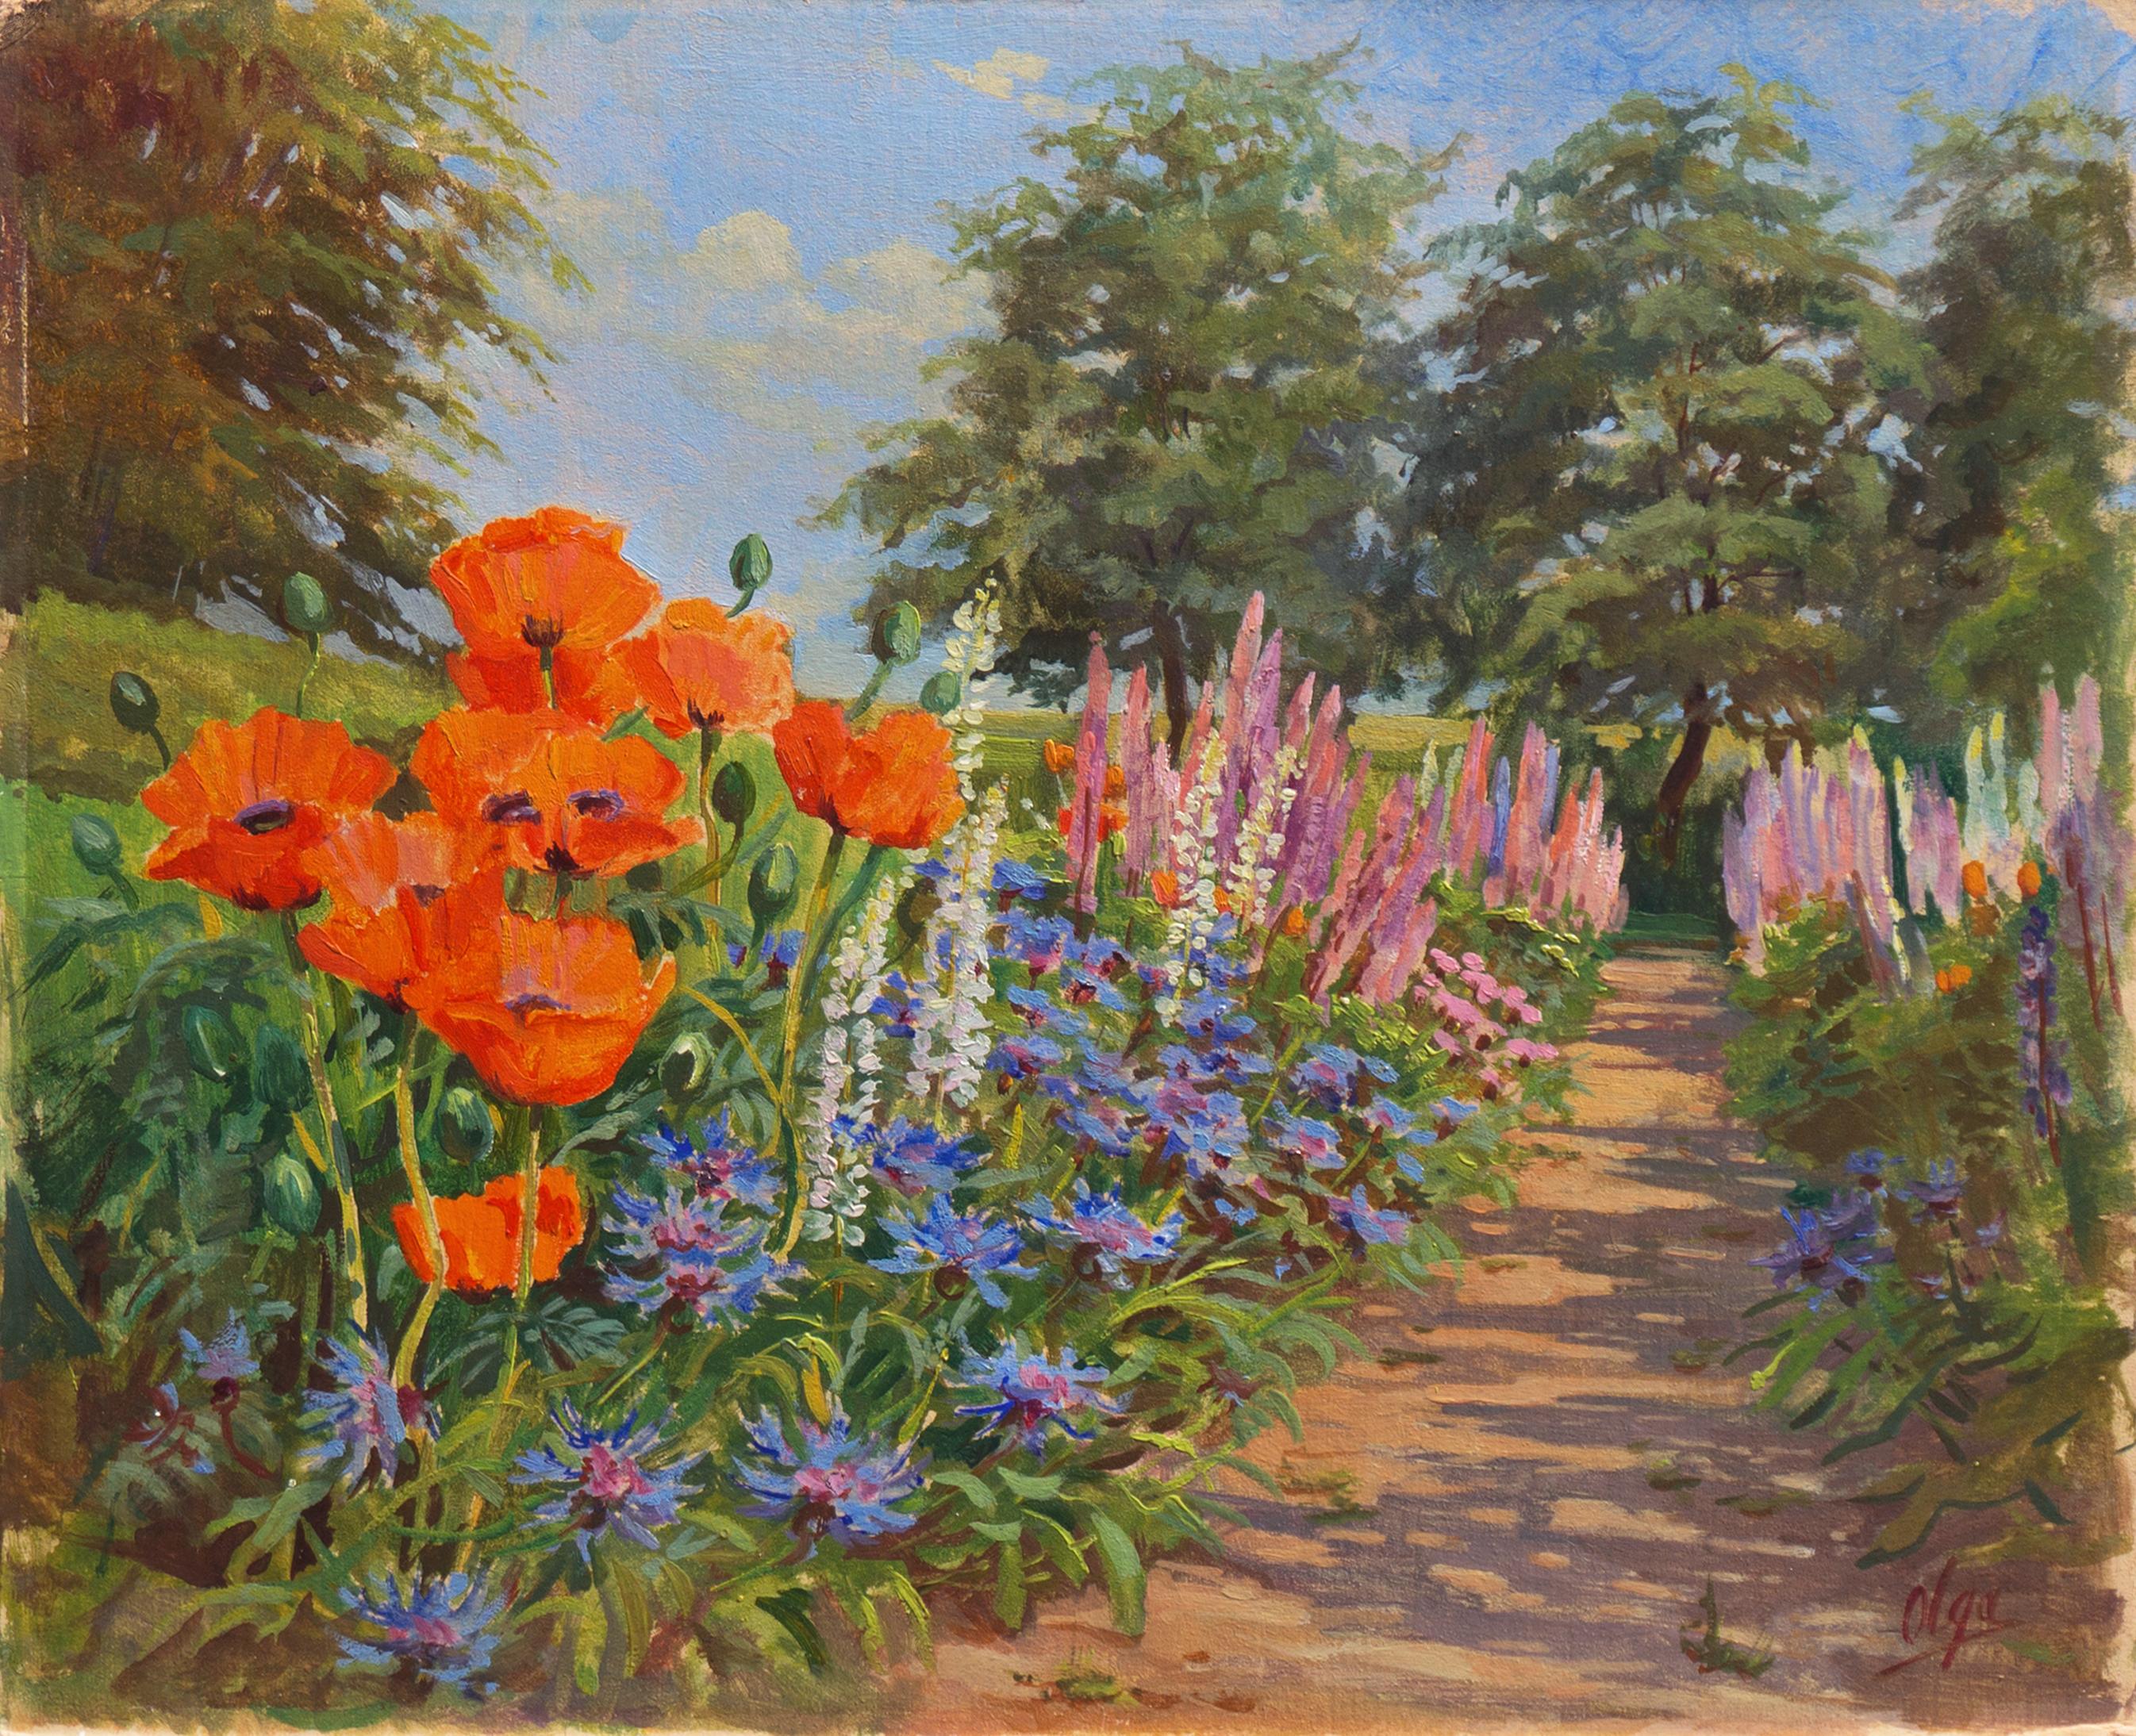 Landscape Painting Olga Alexandrovna - « Le jardin de la ferme de Knudsminde », tsar Nicolas II, reine Elizabeth II, russe